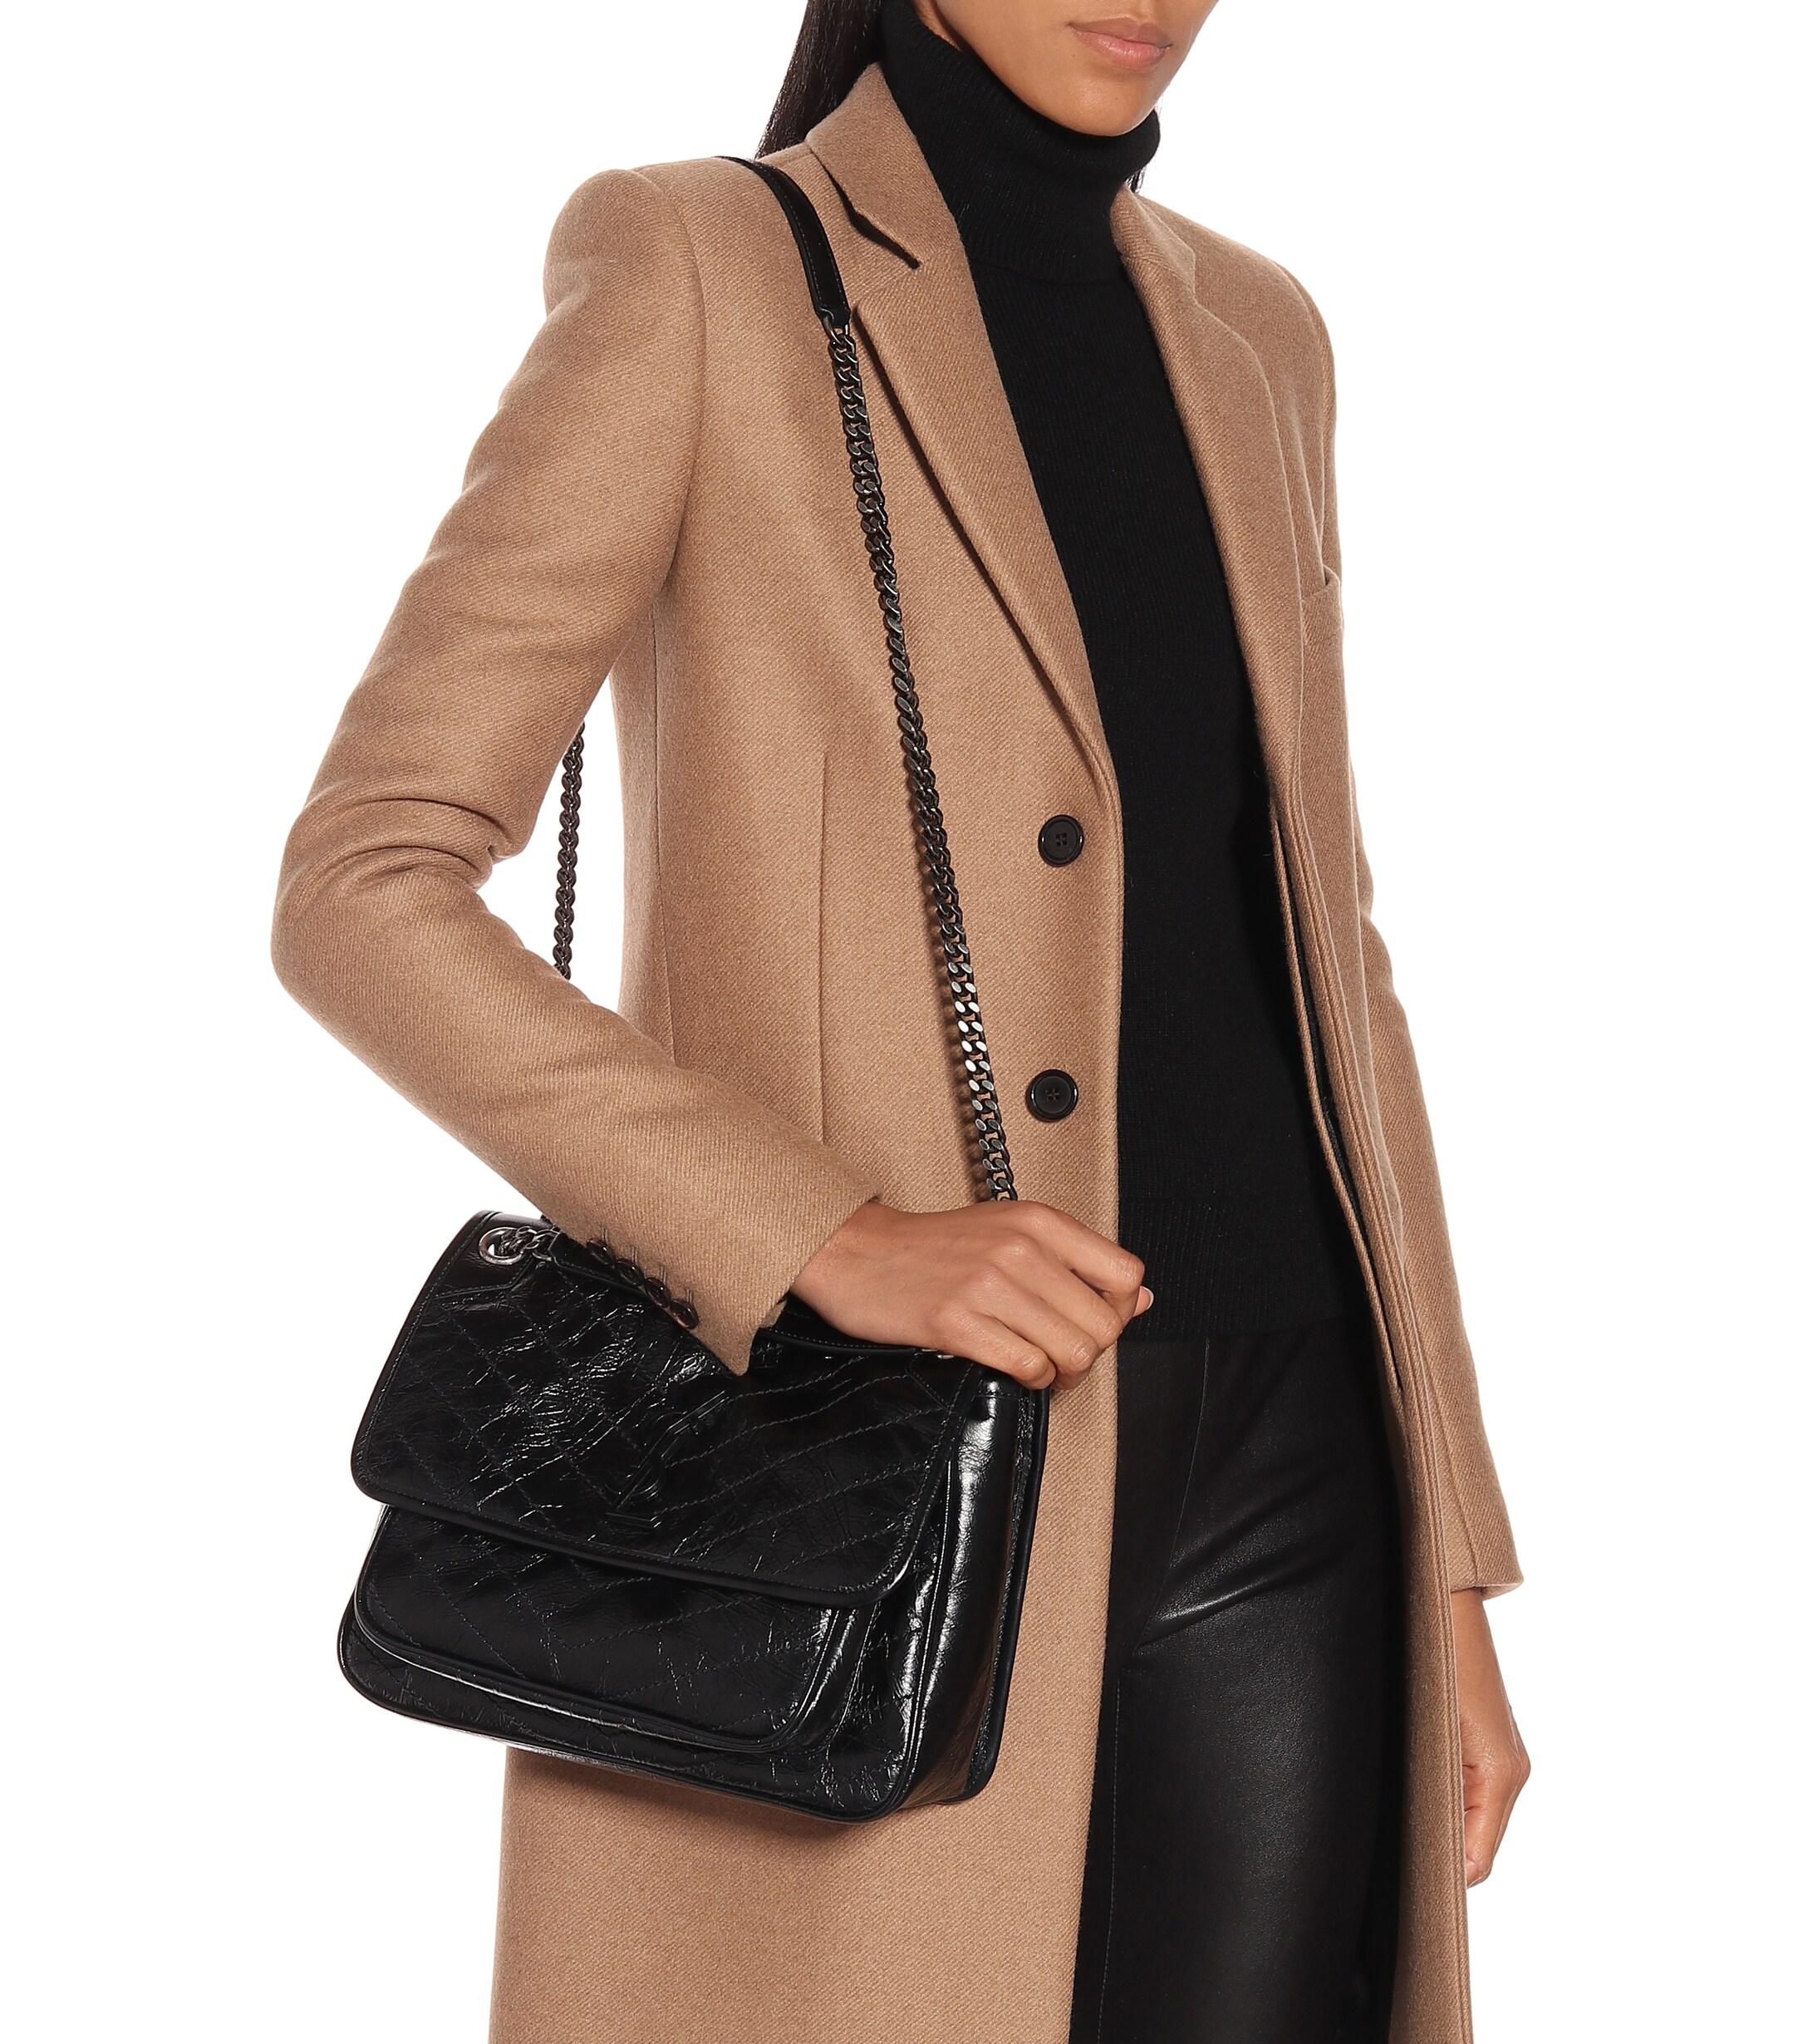 Saint Laurent Medium Niki Leather Shoulder Bag in Black - Lyst